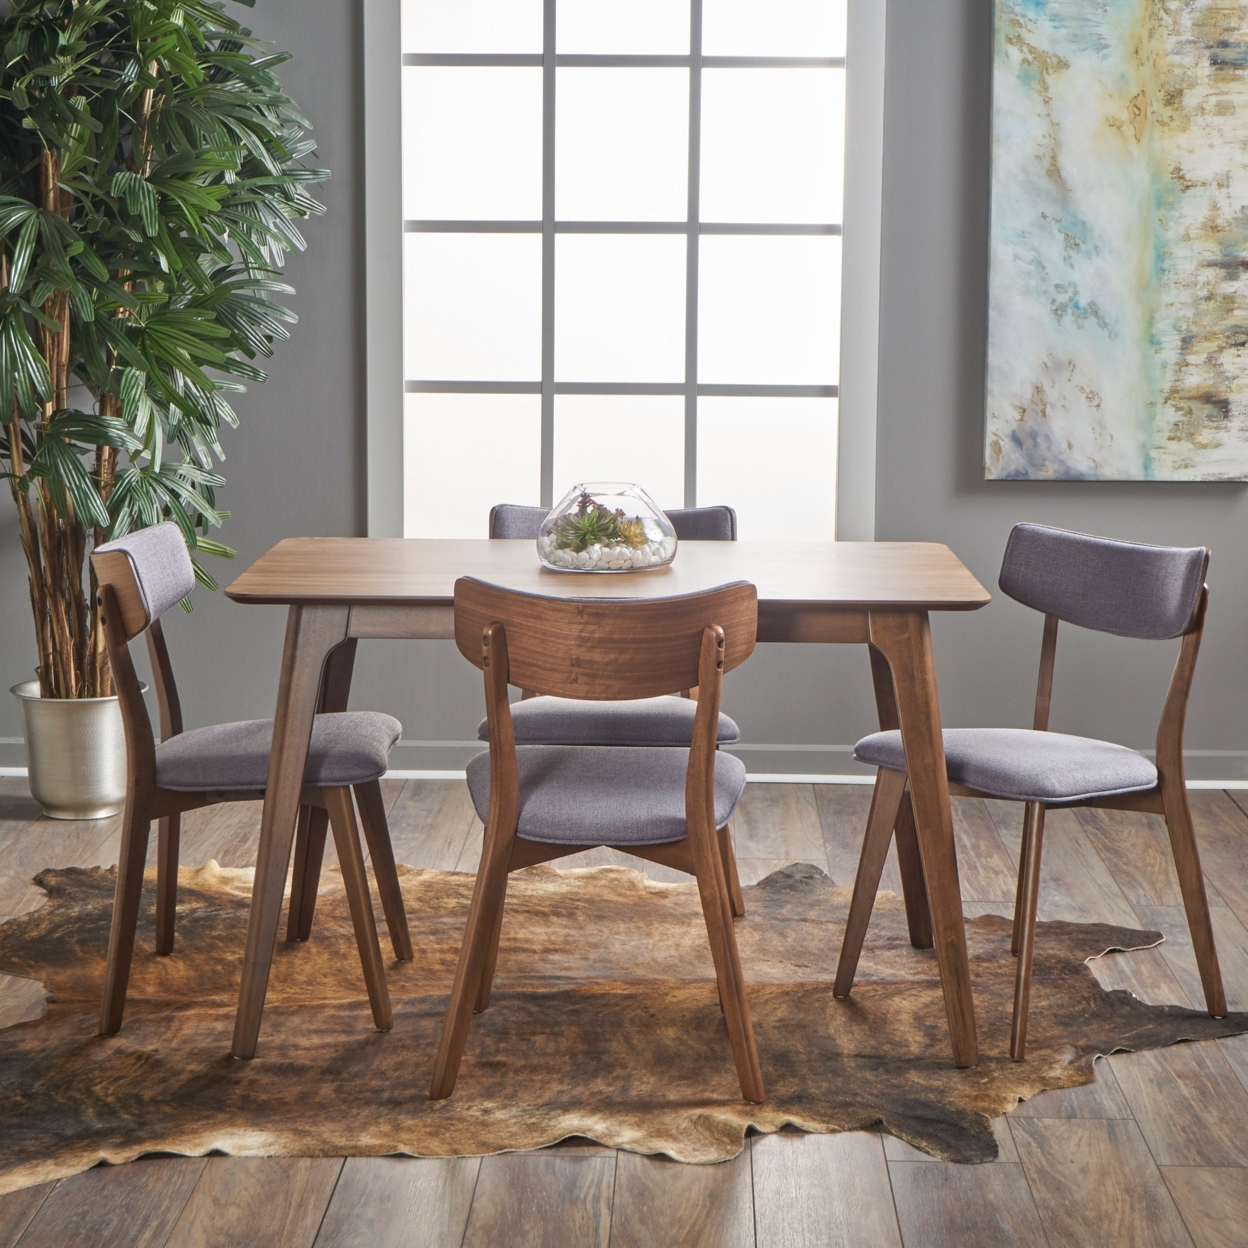 GDF Studio Leora Mid Century Modern Wood Fabric Upholstered 5 Piece Dining Set, Light Beige and Walnut - image 1 of 3